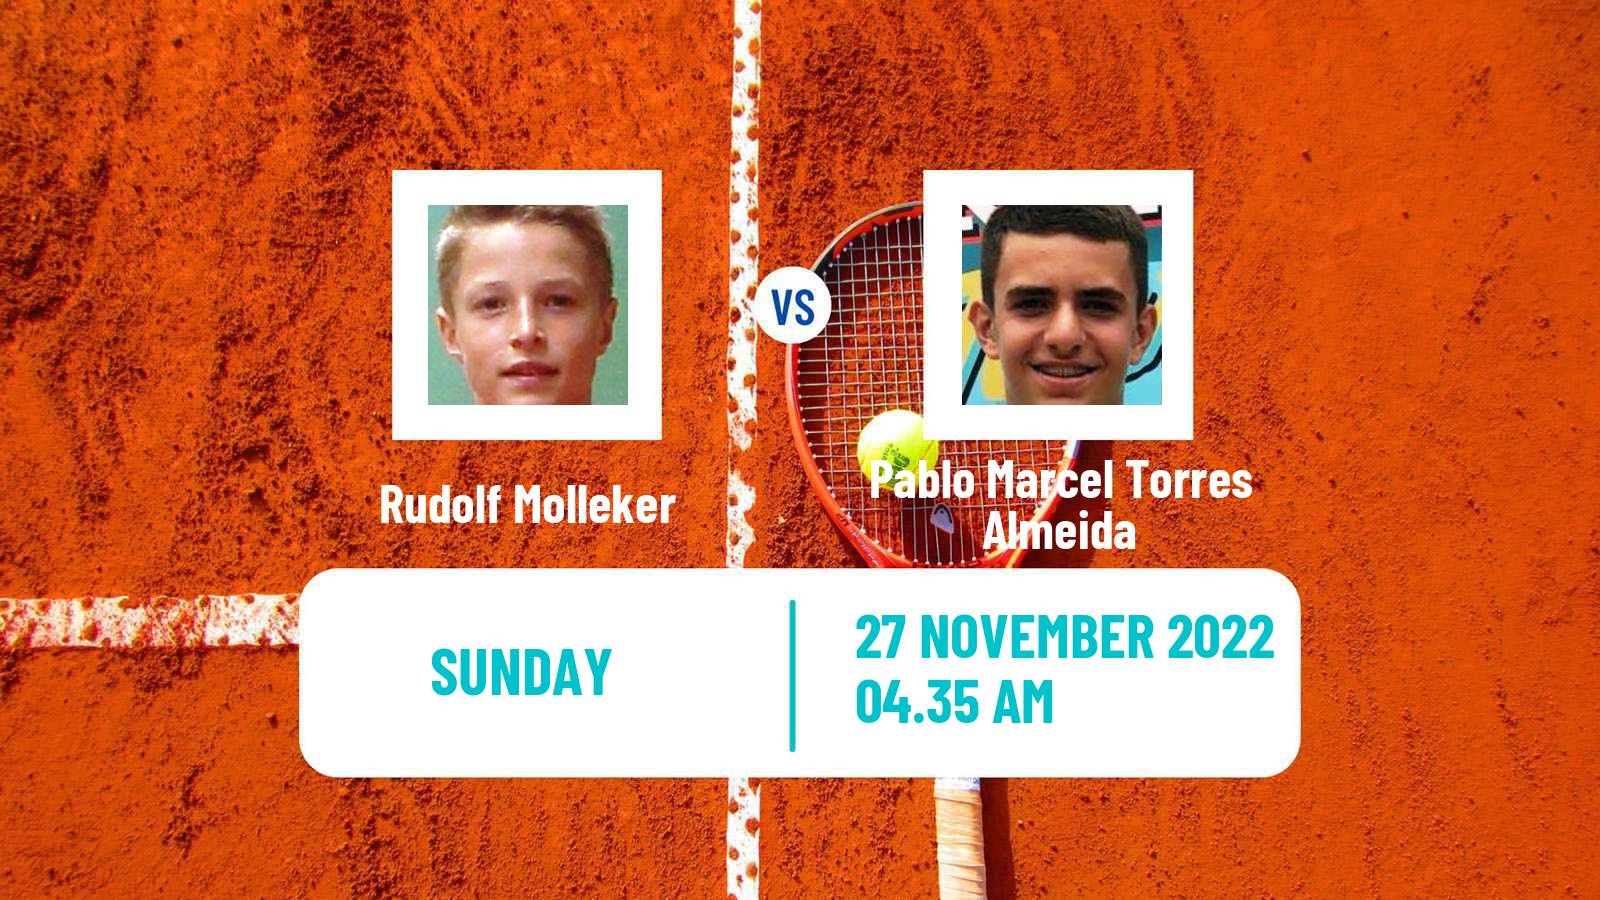 Tennis ATP Challenger Rudolf Molleker - Pablo Marcel Torres Almeida